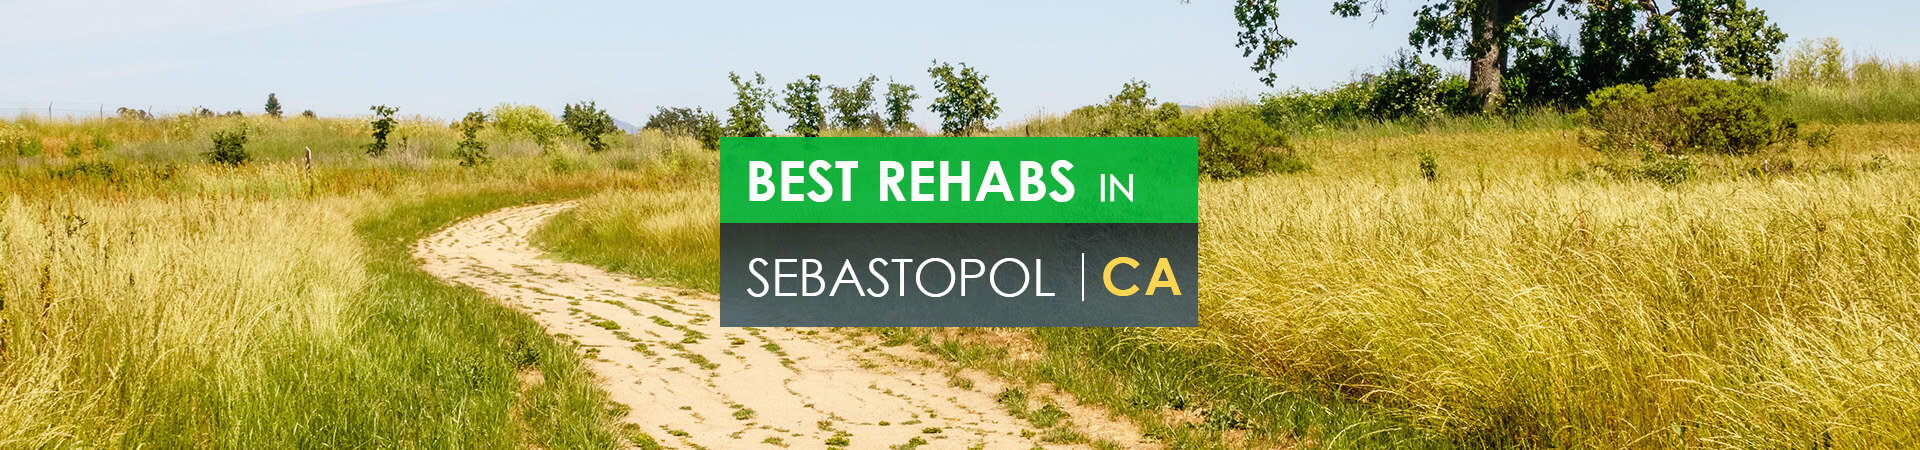 Best rehabs in Sebastopol, CA